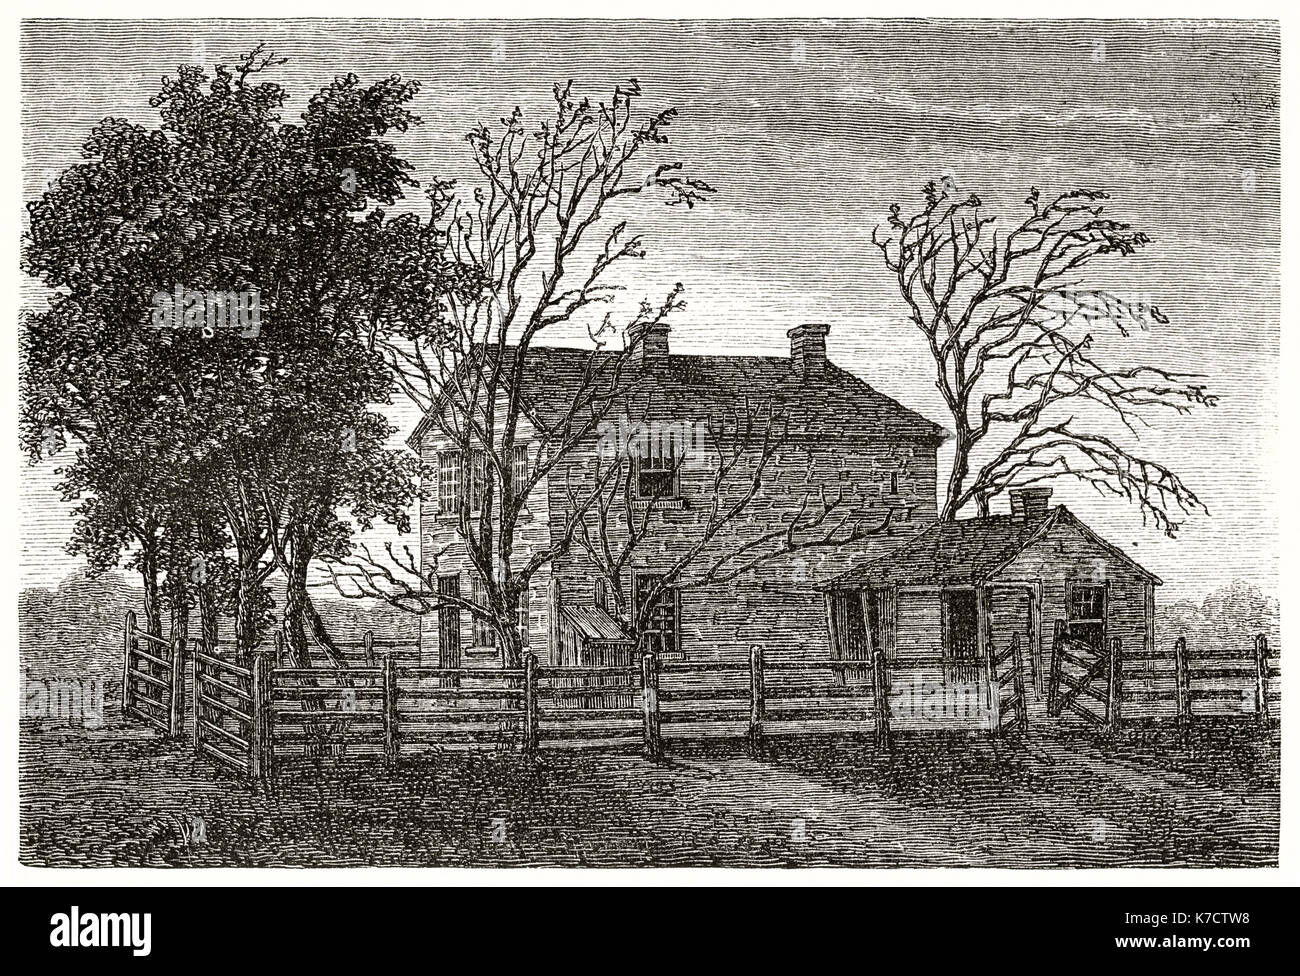 Old view of the prison in Carthage, Illinois, where Mormon prophete Smith died. By Ferogio, publ. on Le Tour du Monde, Paris, 1862 Stock Photo